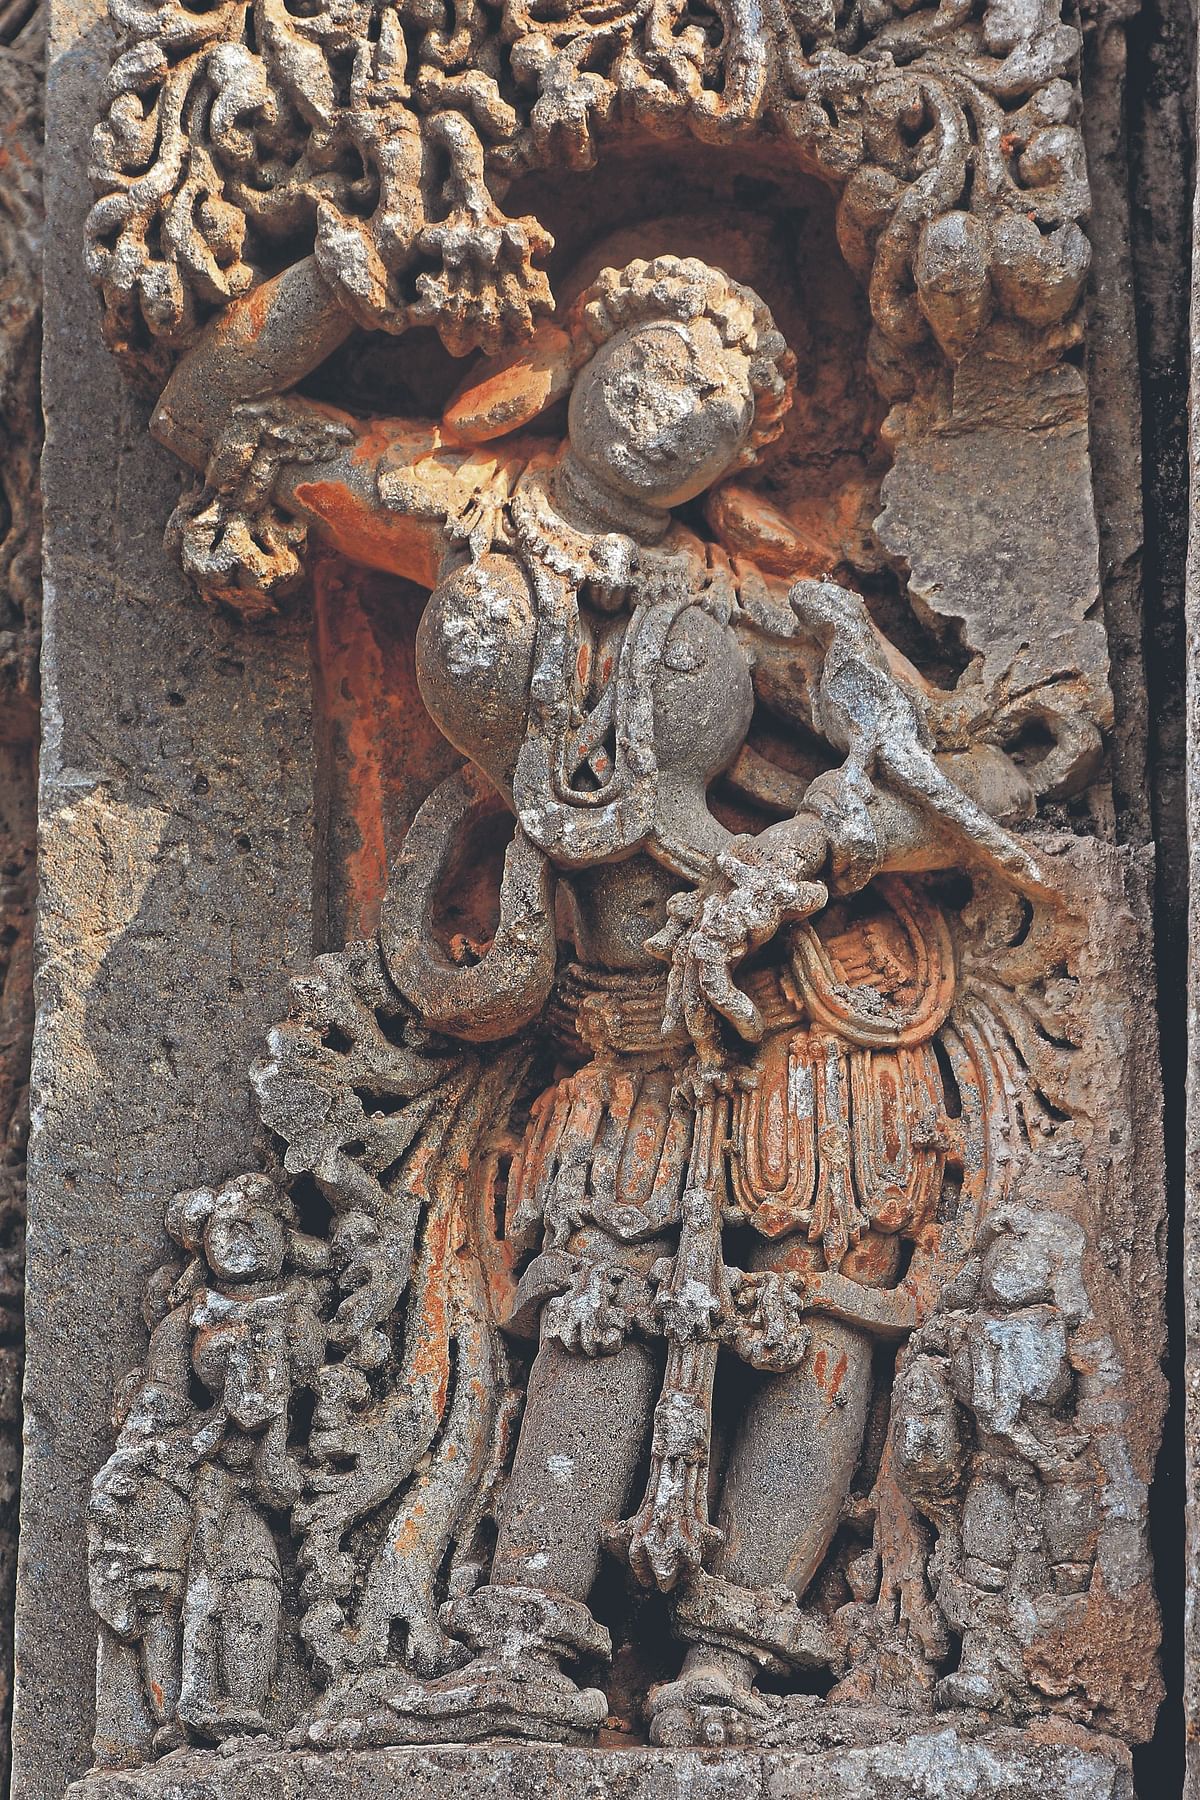 Mastery in stonework: Jewel of Jinanathapura